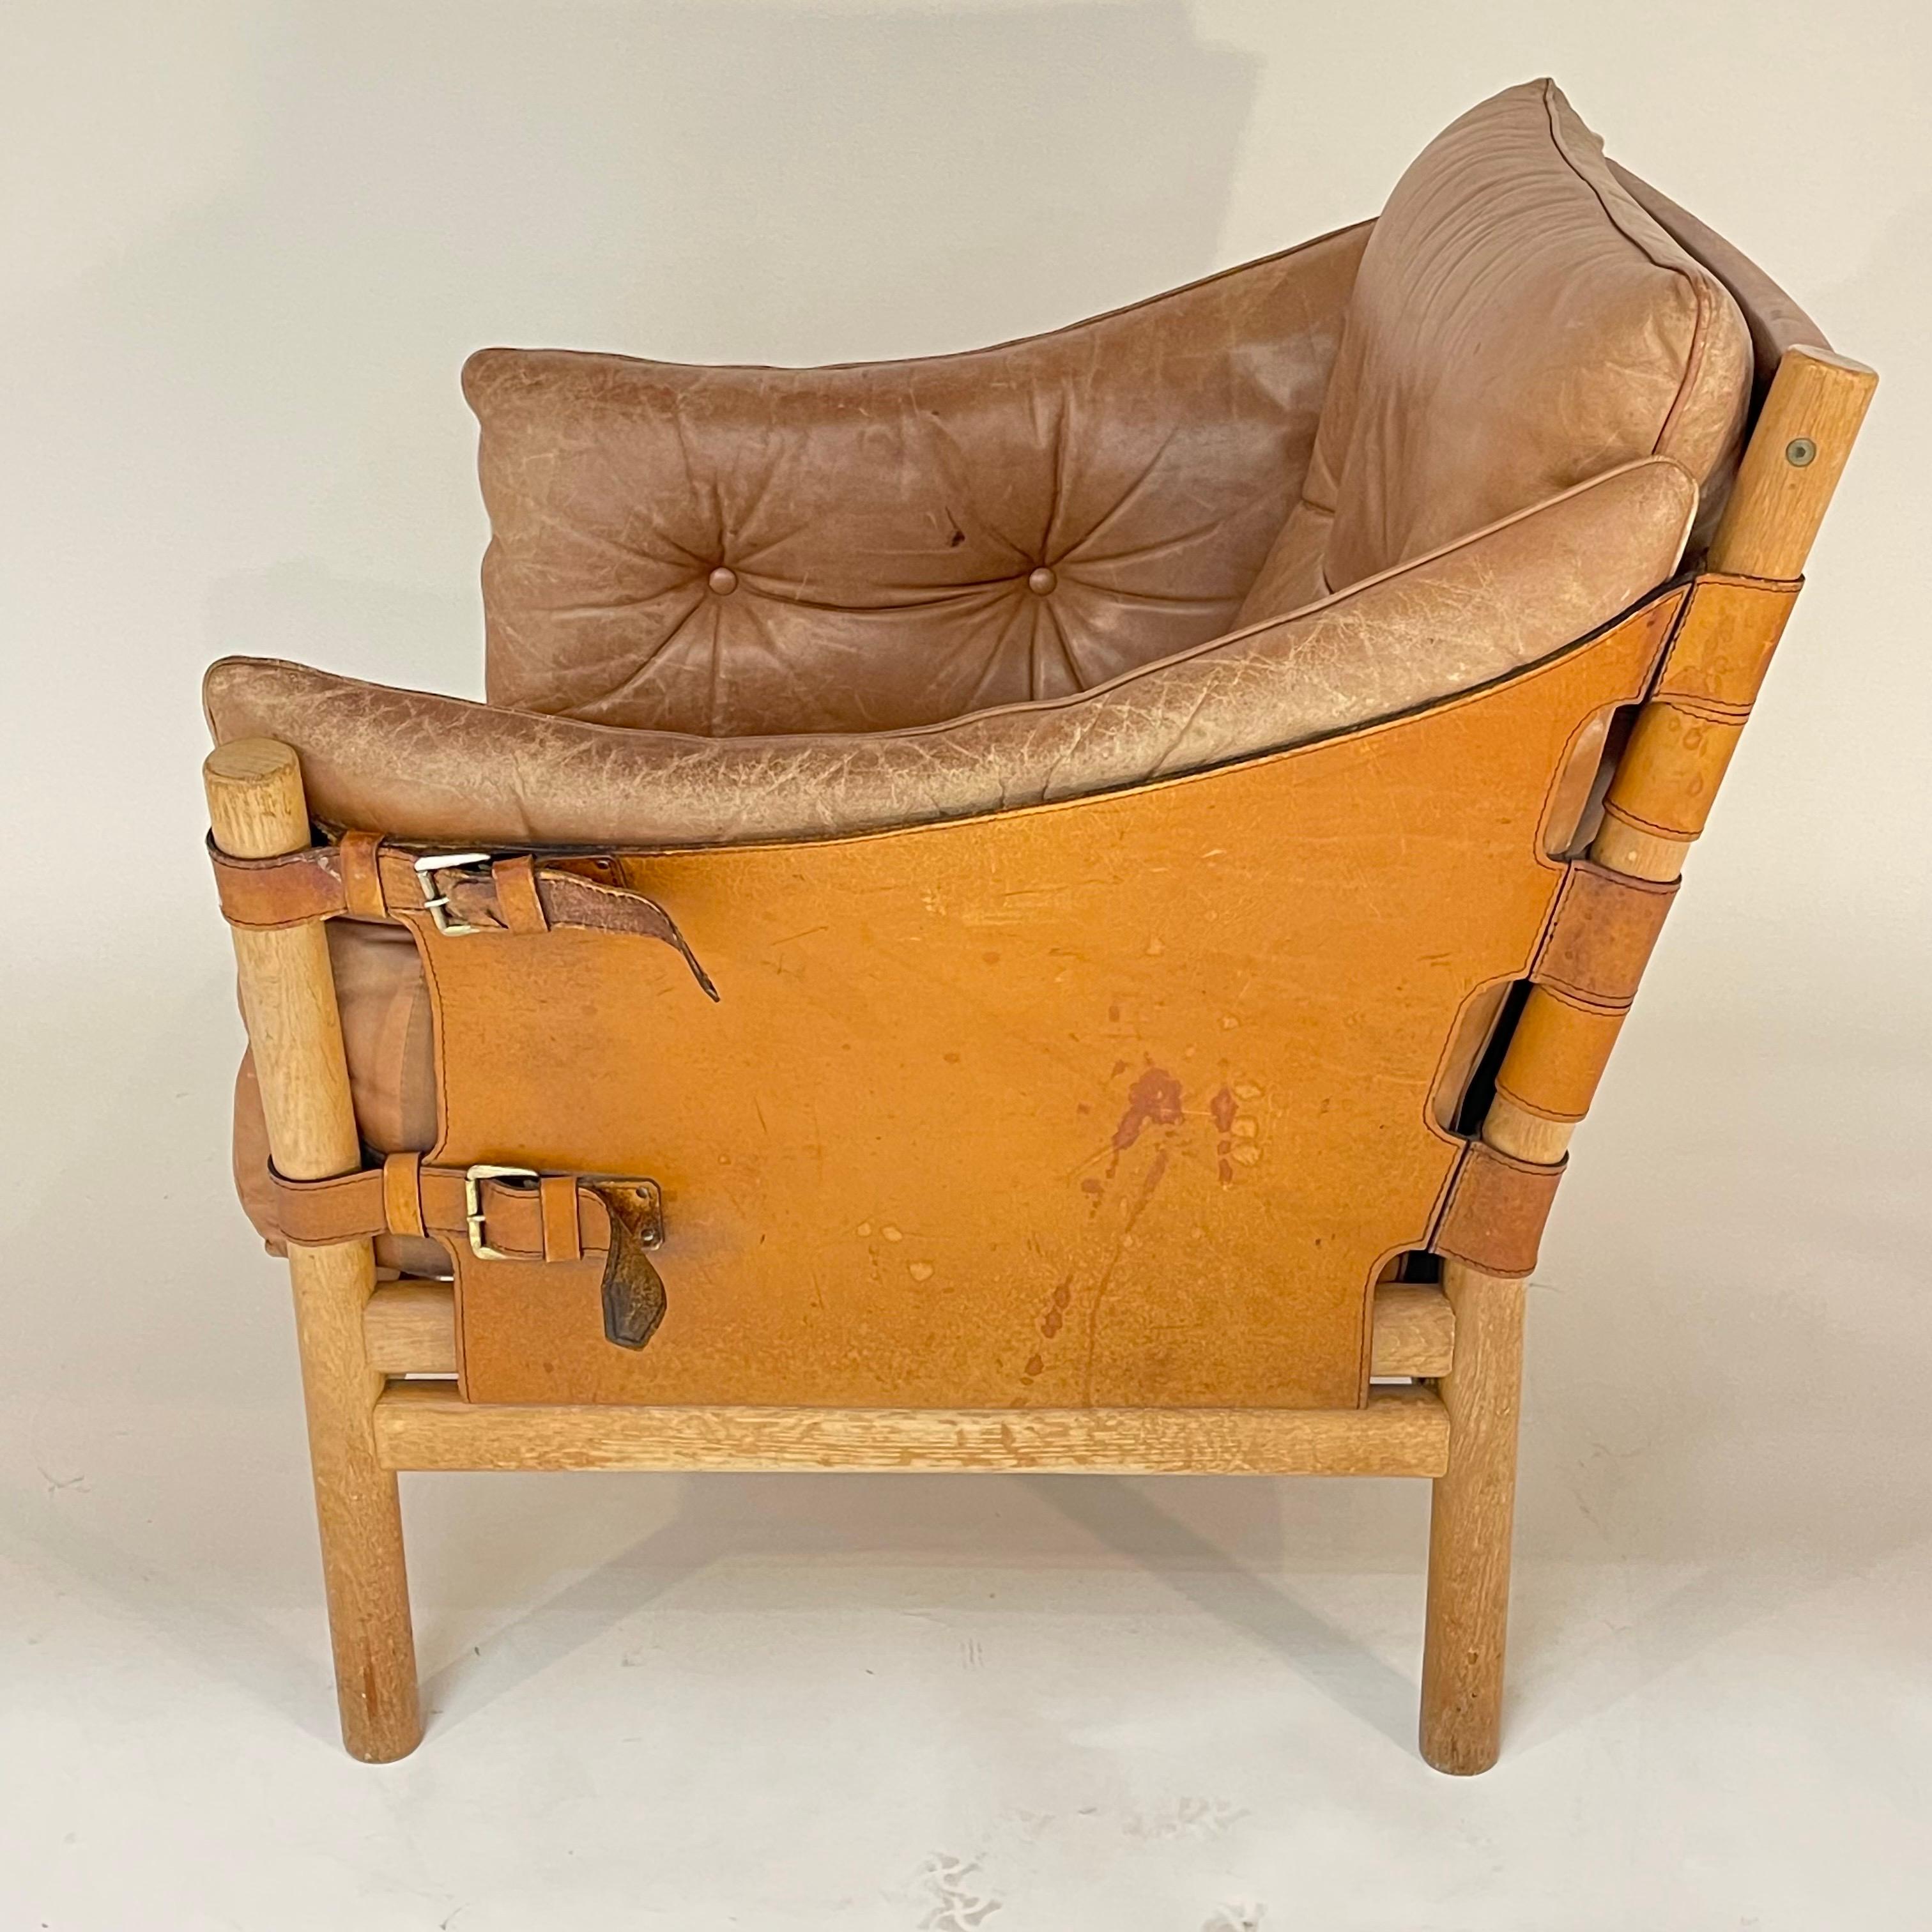 Metal Arne Norell Ilona Oak and Cognac Leather Campaign Safari Chair, Sweden, 1970s For Sale